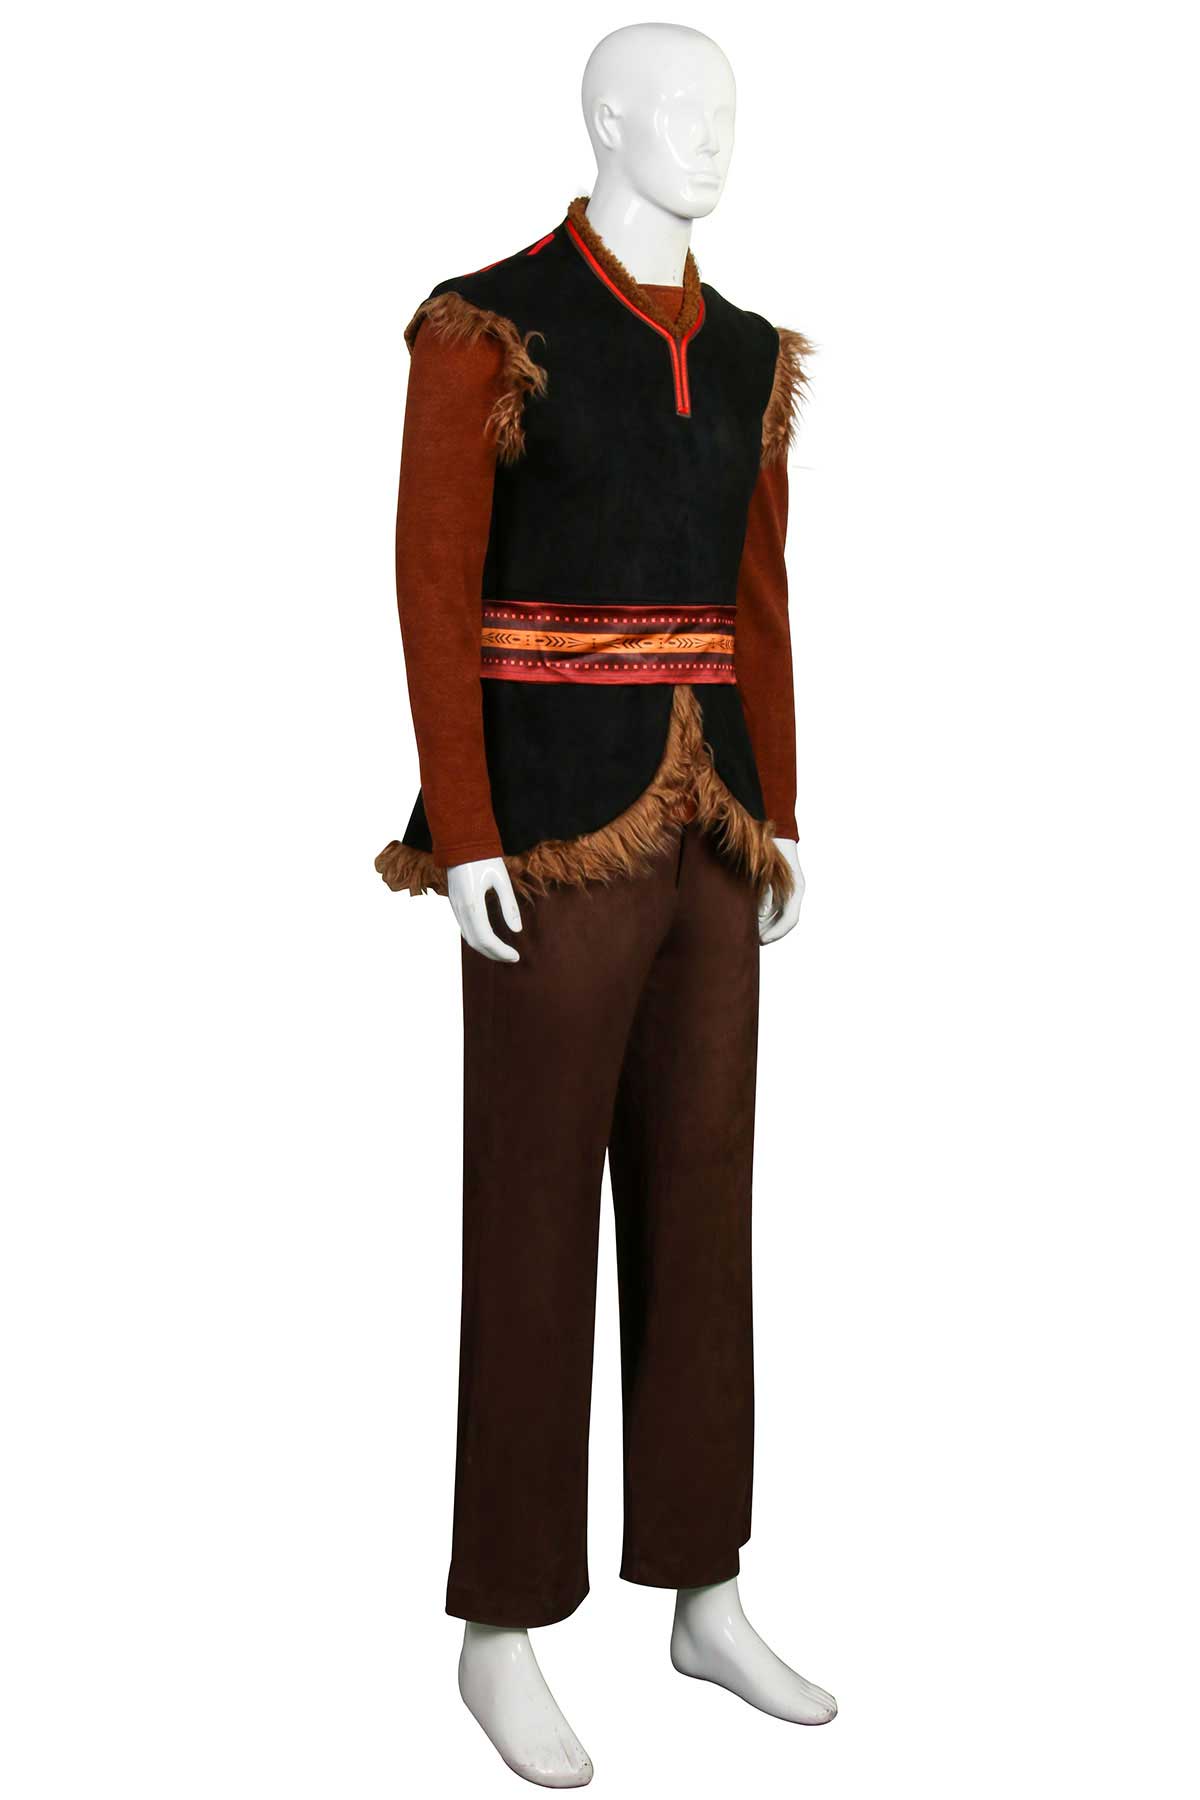 disney gelen 2 costume kristoff adulte halloween cosplay tenue de cosplay de manteau pull-------zote Bande pantalon-takerlama